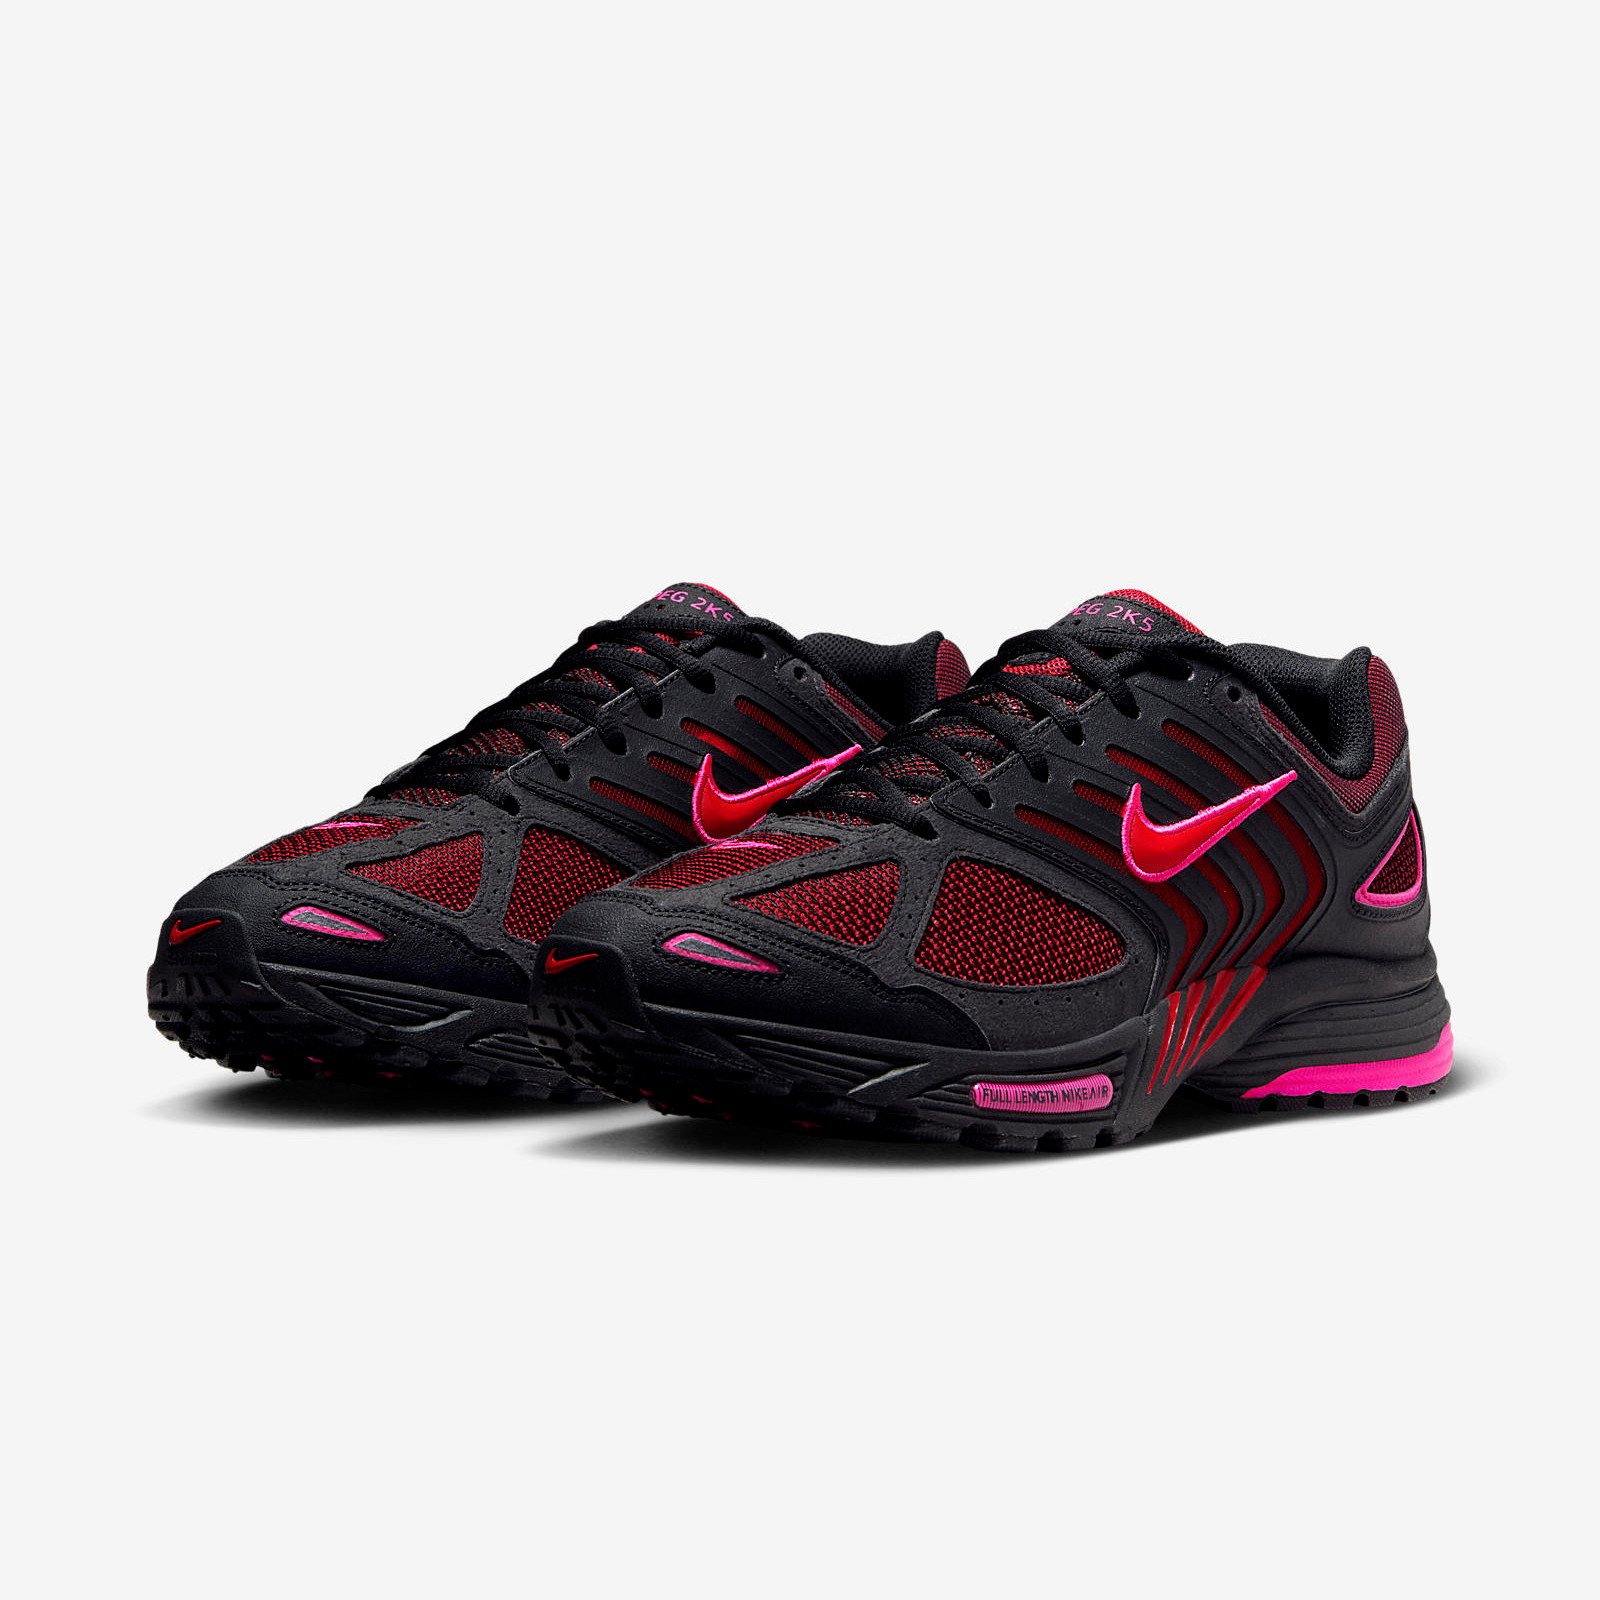 Nike Air Peg 2K5
Black / Fire Red